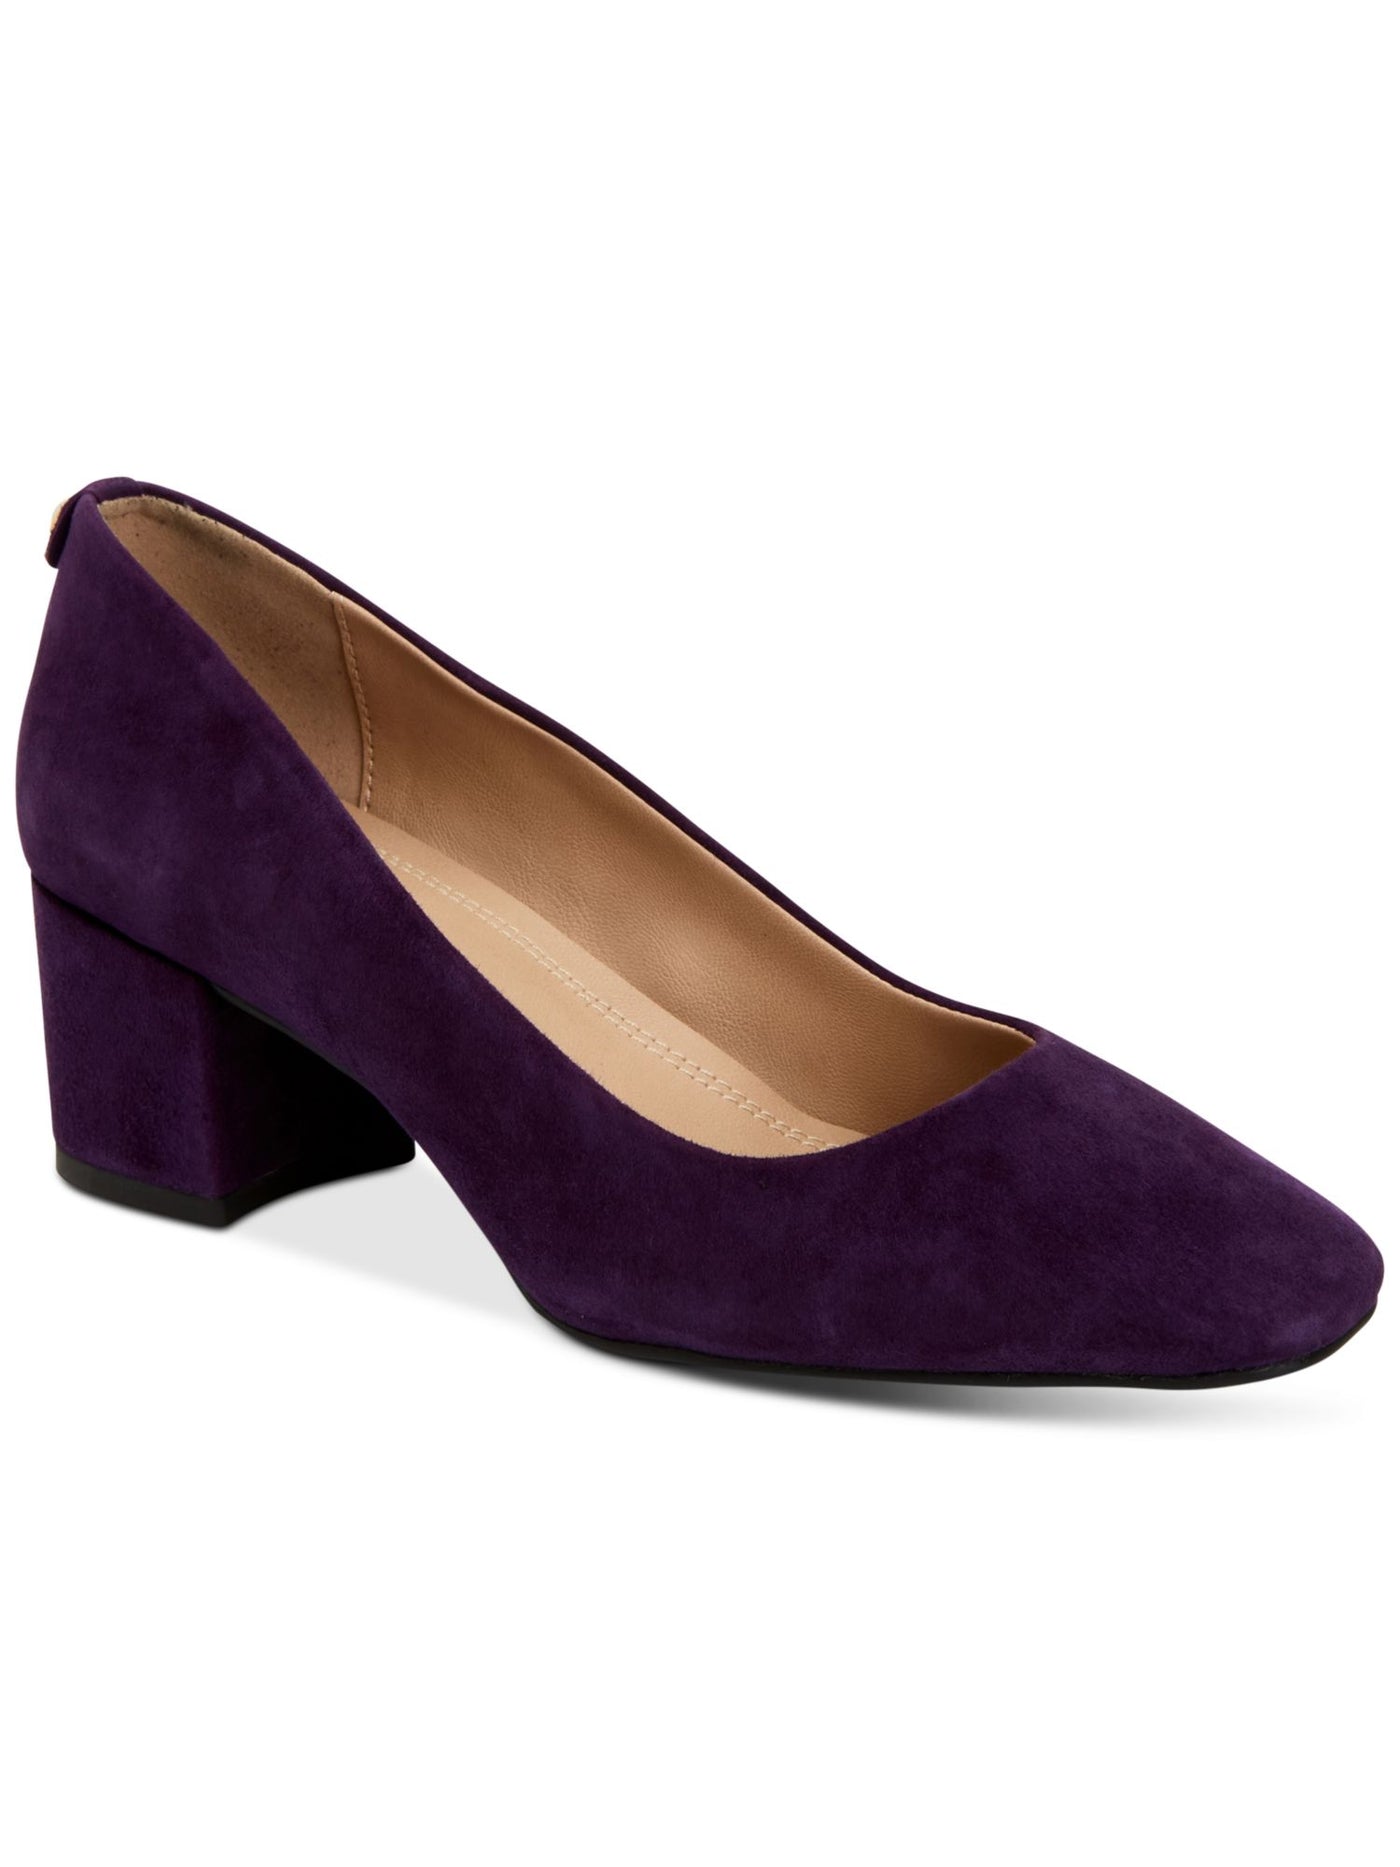 CHARTER CLUB Womens Plum Purple Padded Slip Resistant Saraa Square Toe Block Heel Slip On Leather Dress Pumps Shoes 6.5 M